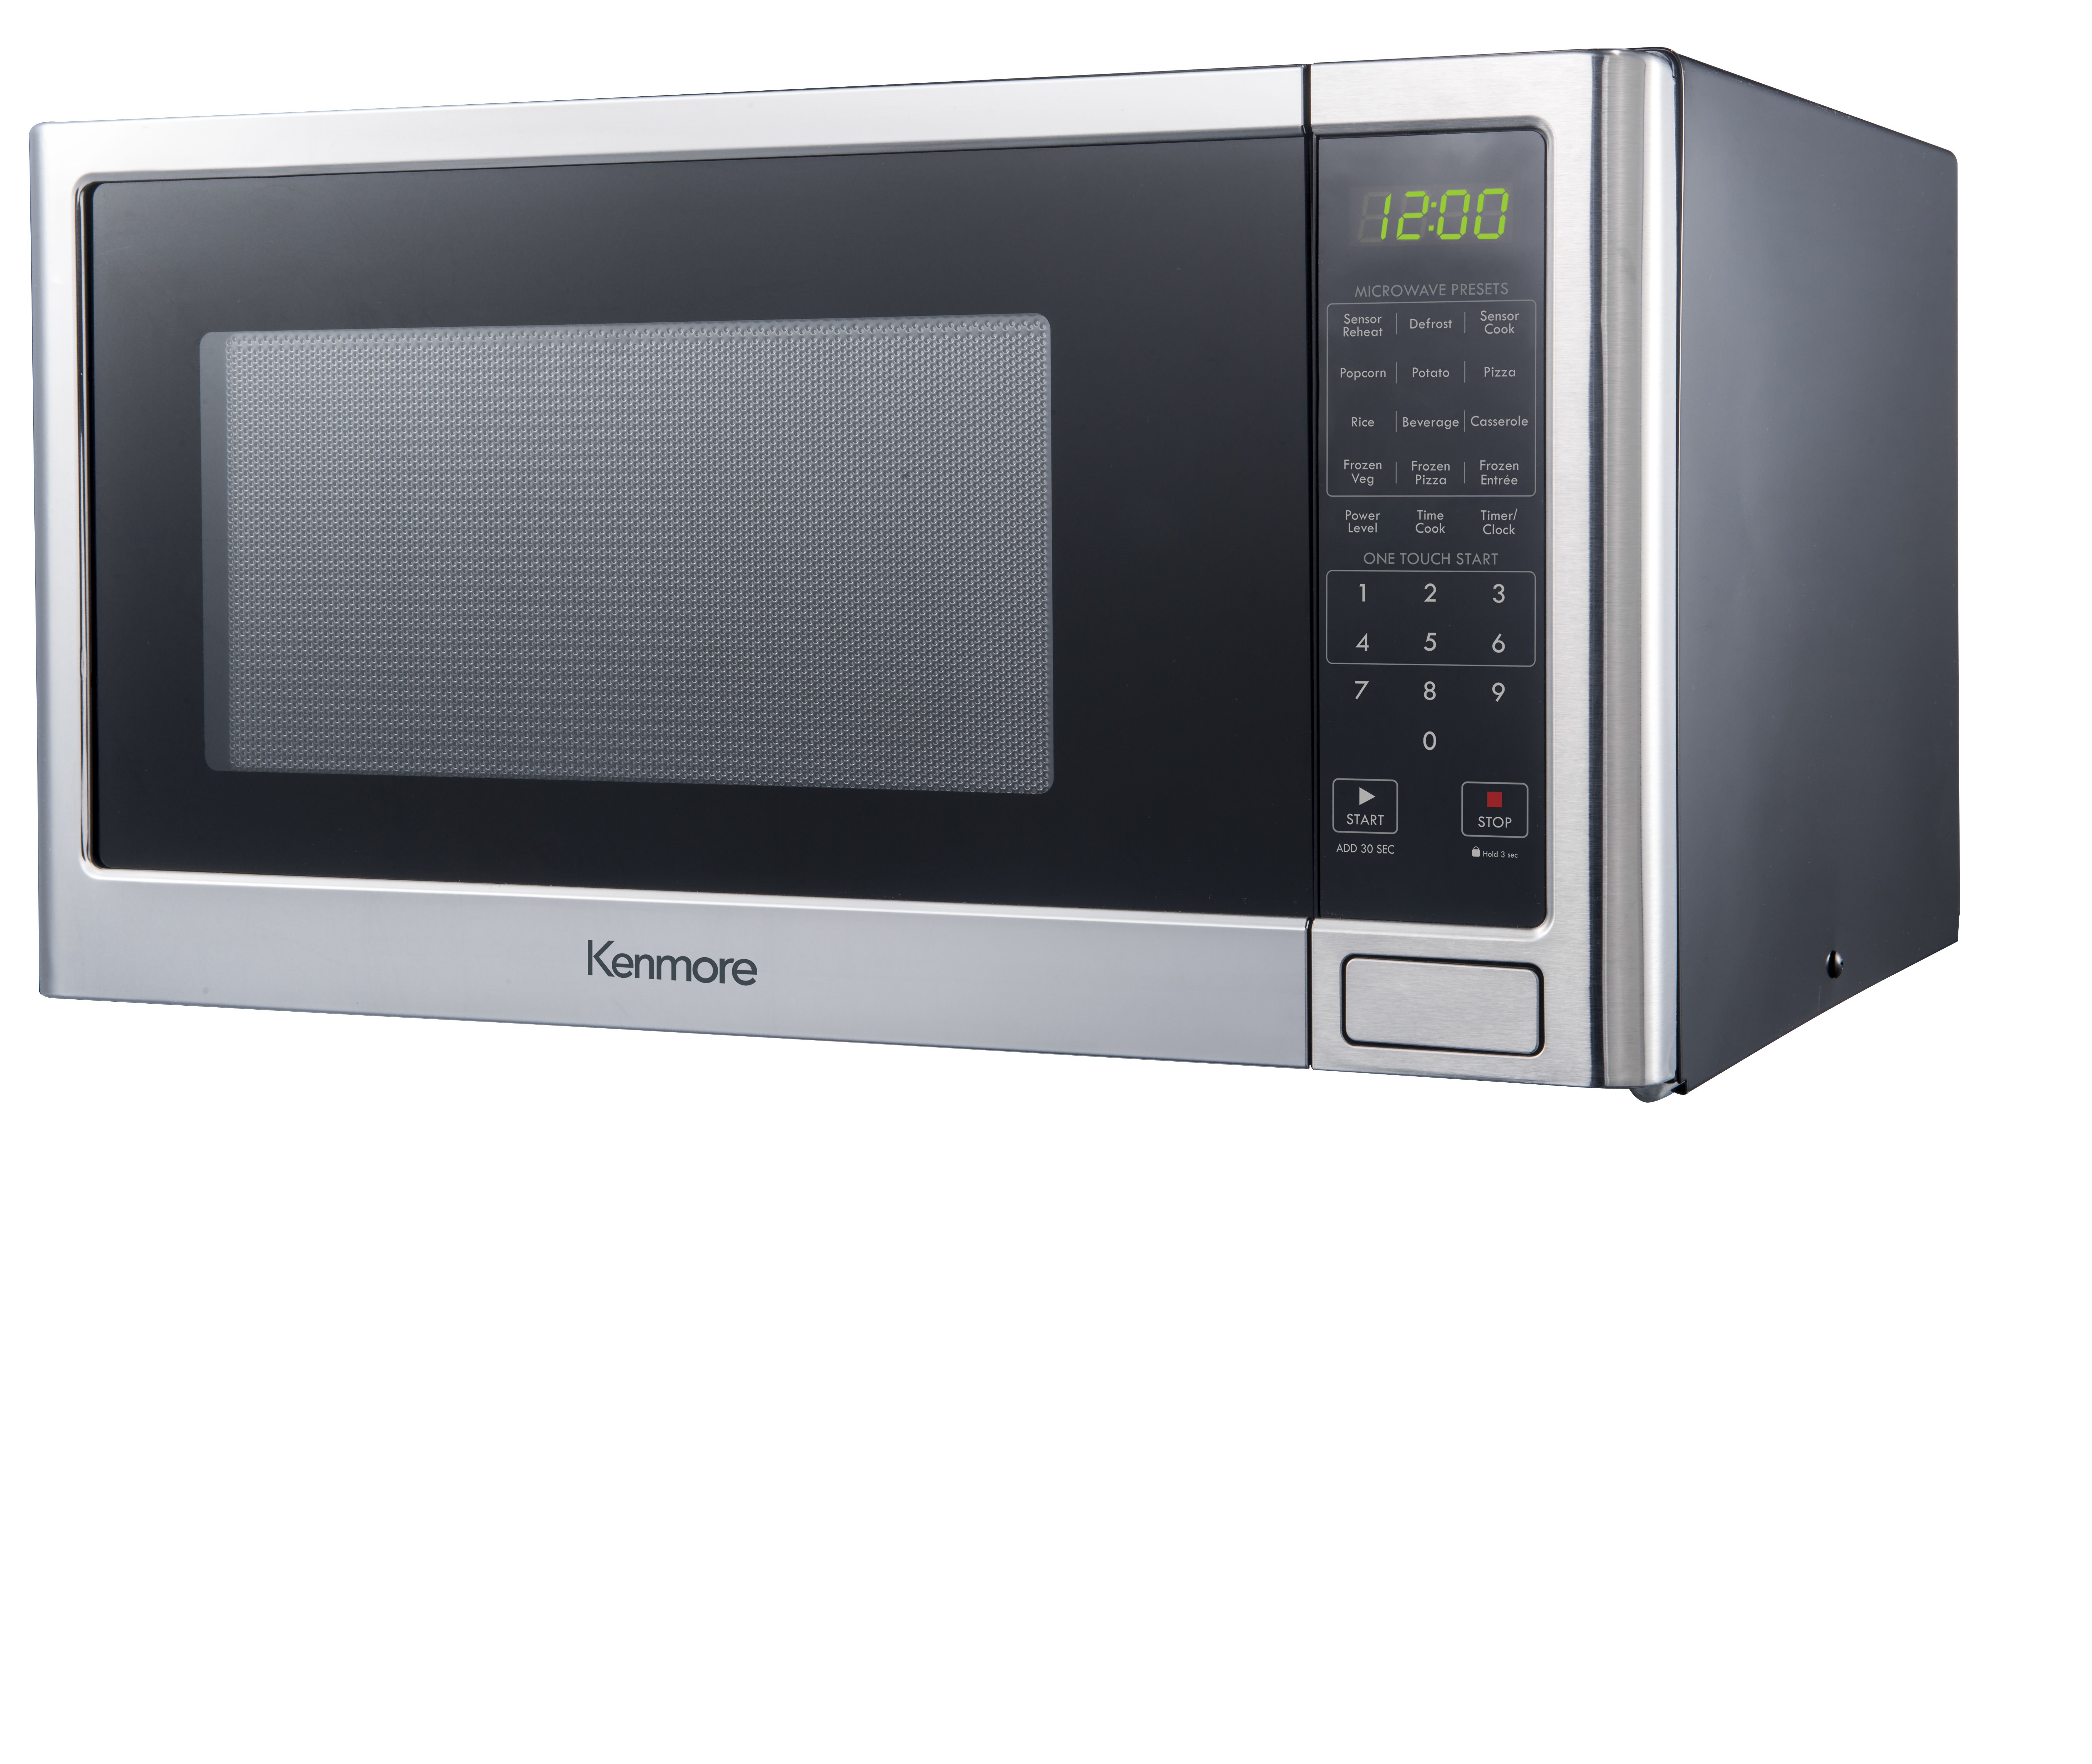 Sears Microwave Ovens Bestmicrowave